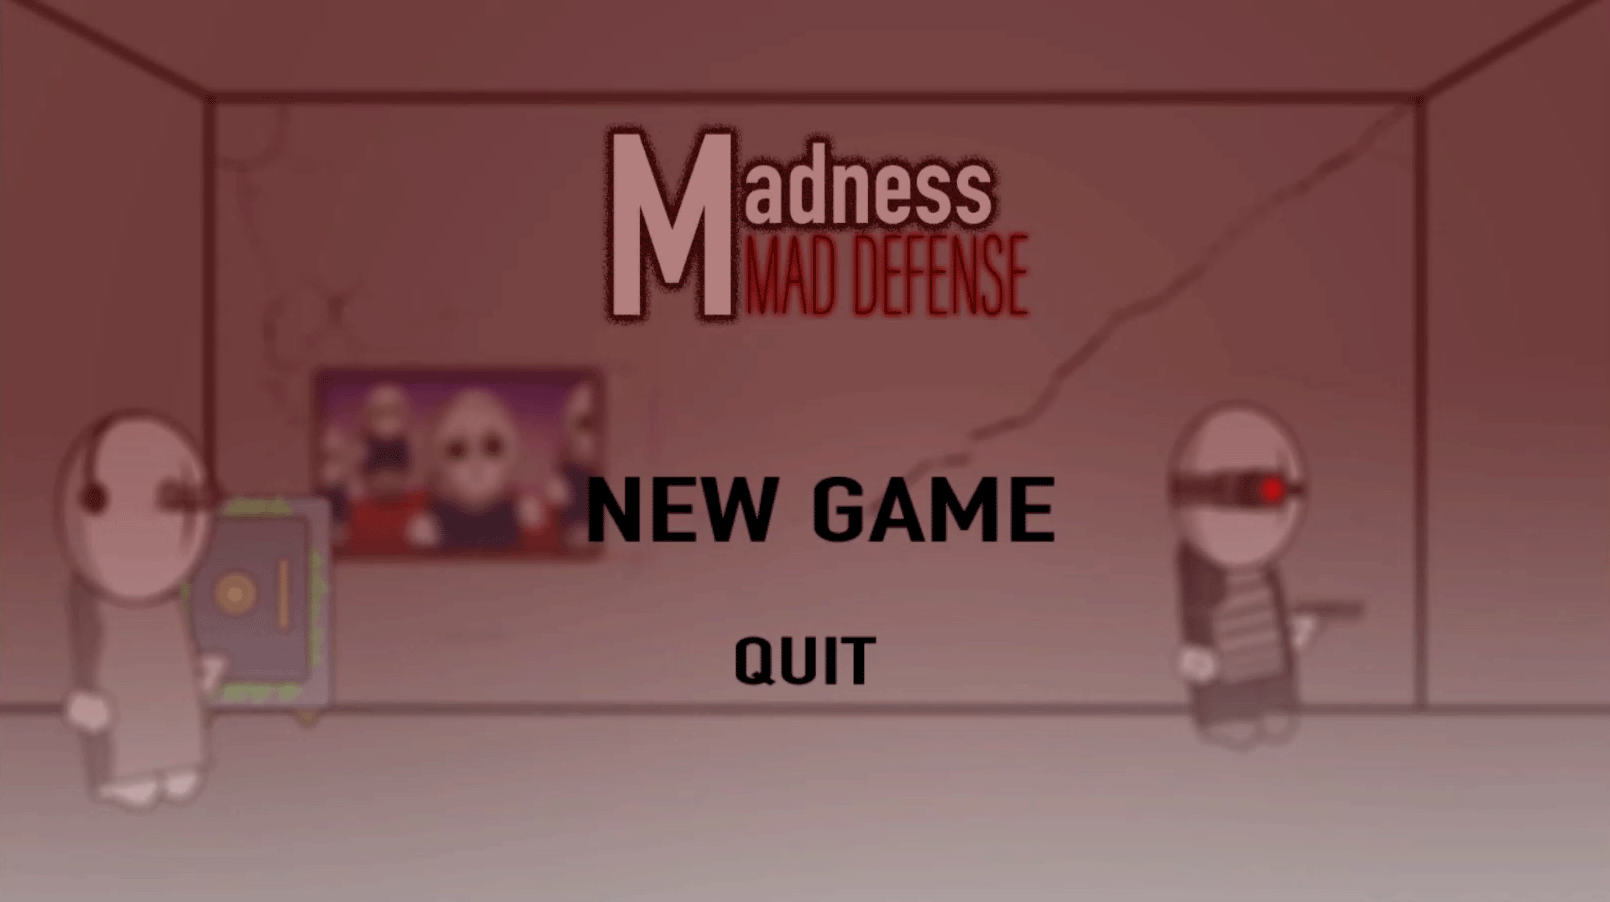 Madness Combat Defense 